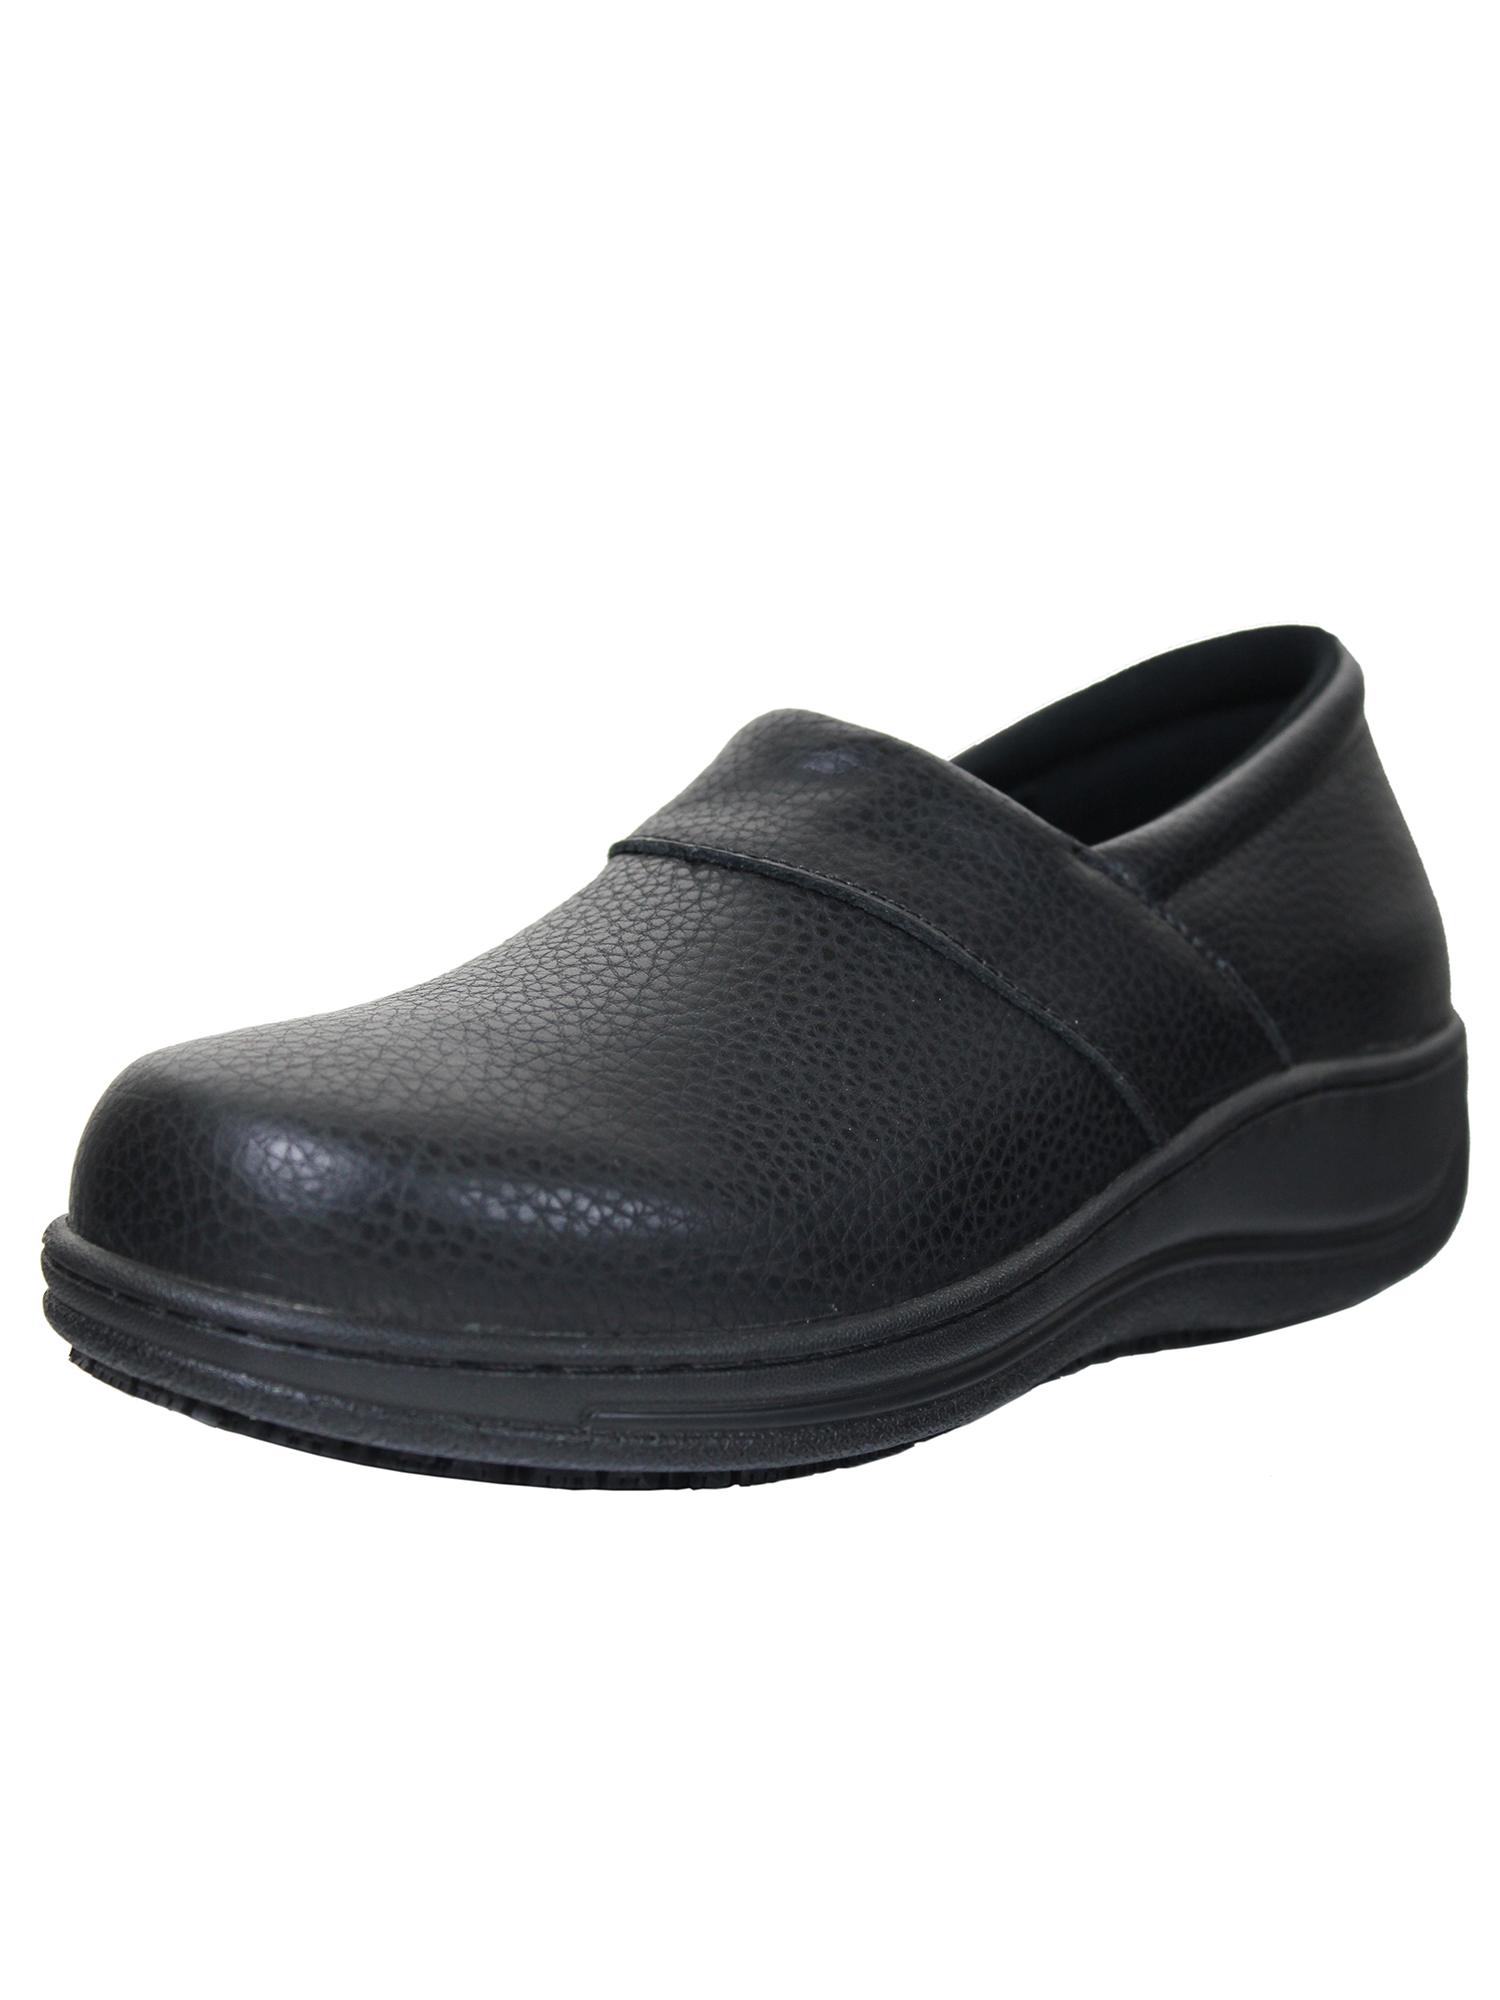 Tanleewa Women's Slip Resistant Work Shoes Waterproof Casual Lightweight Shoe Size 9.5 Adult Male - image 2 of 5